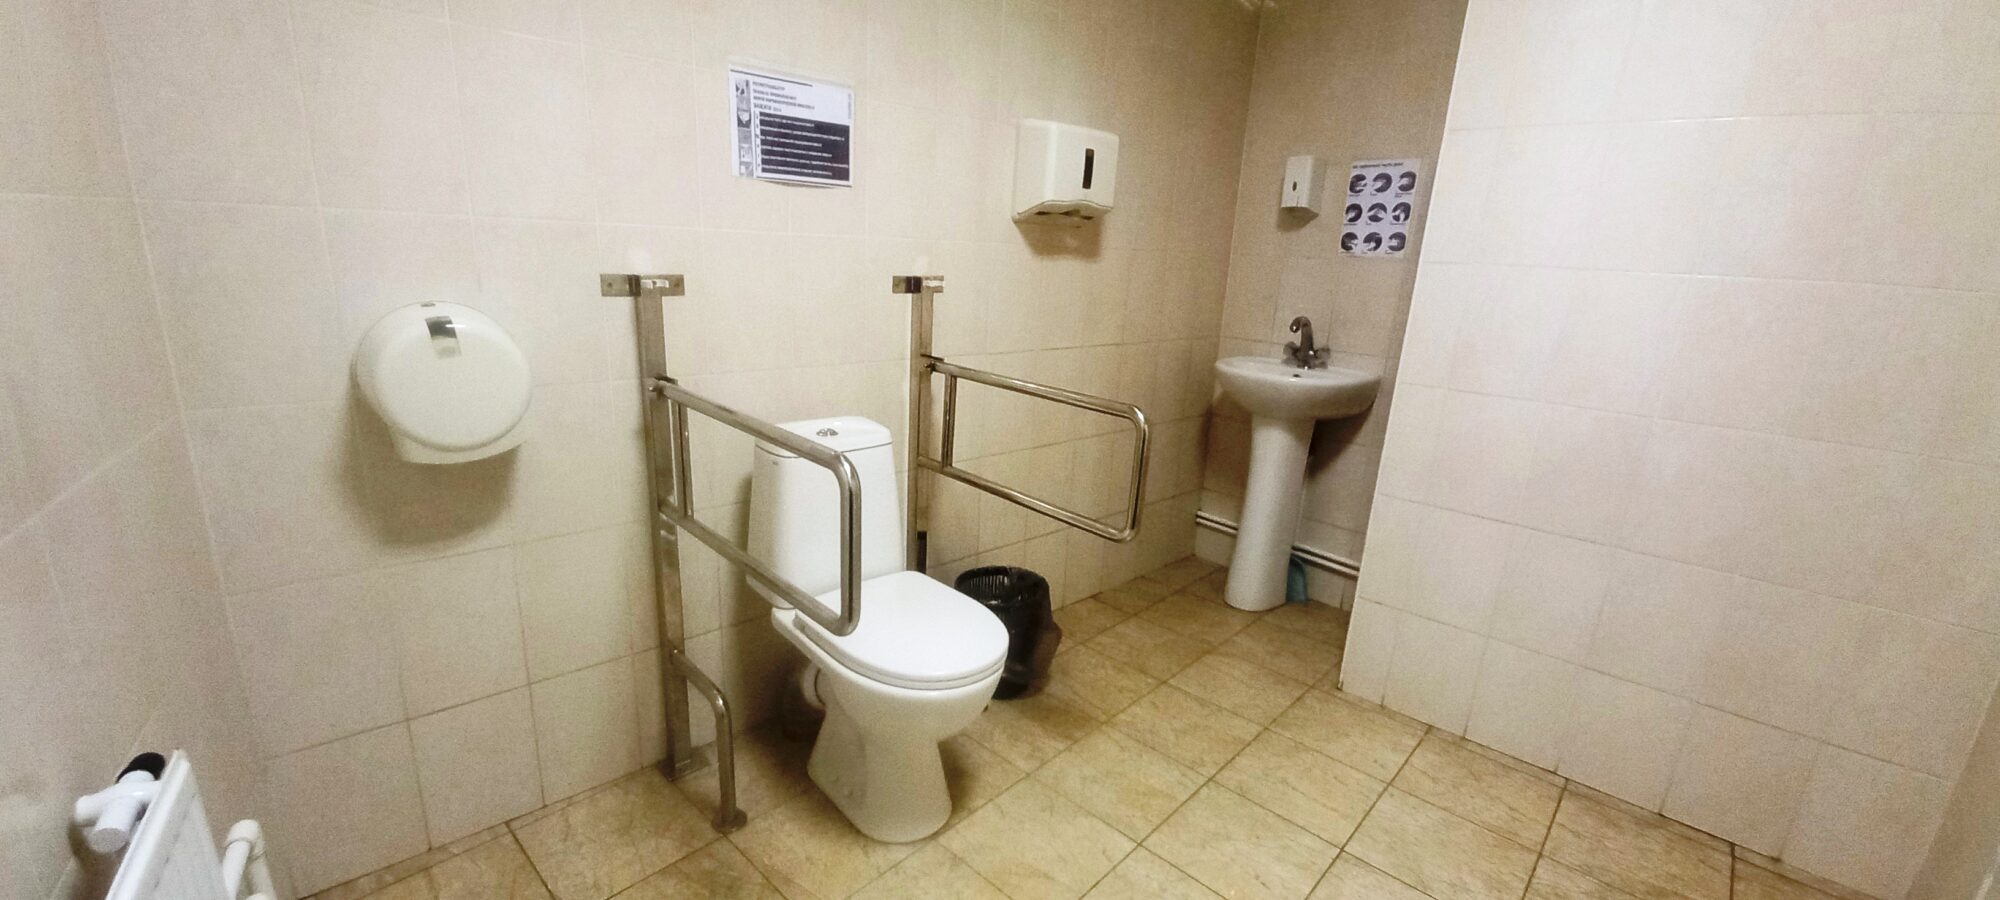 туалет для инвалида